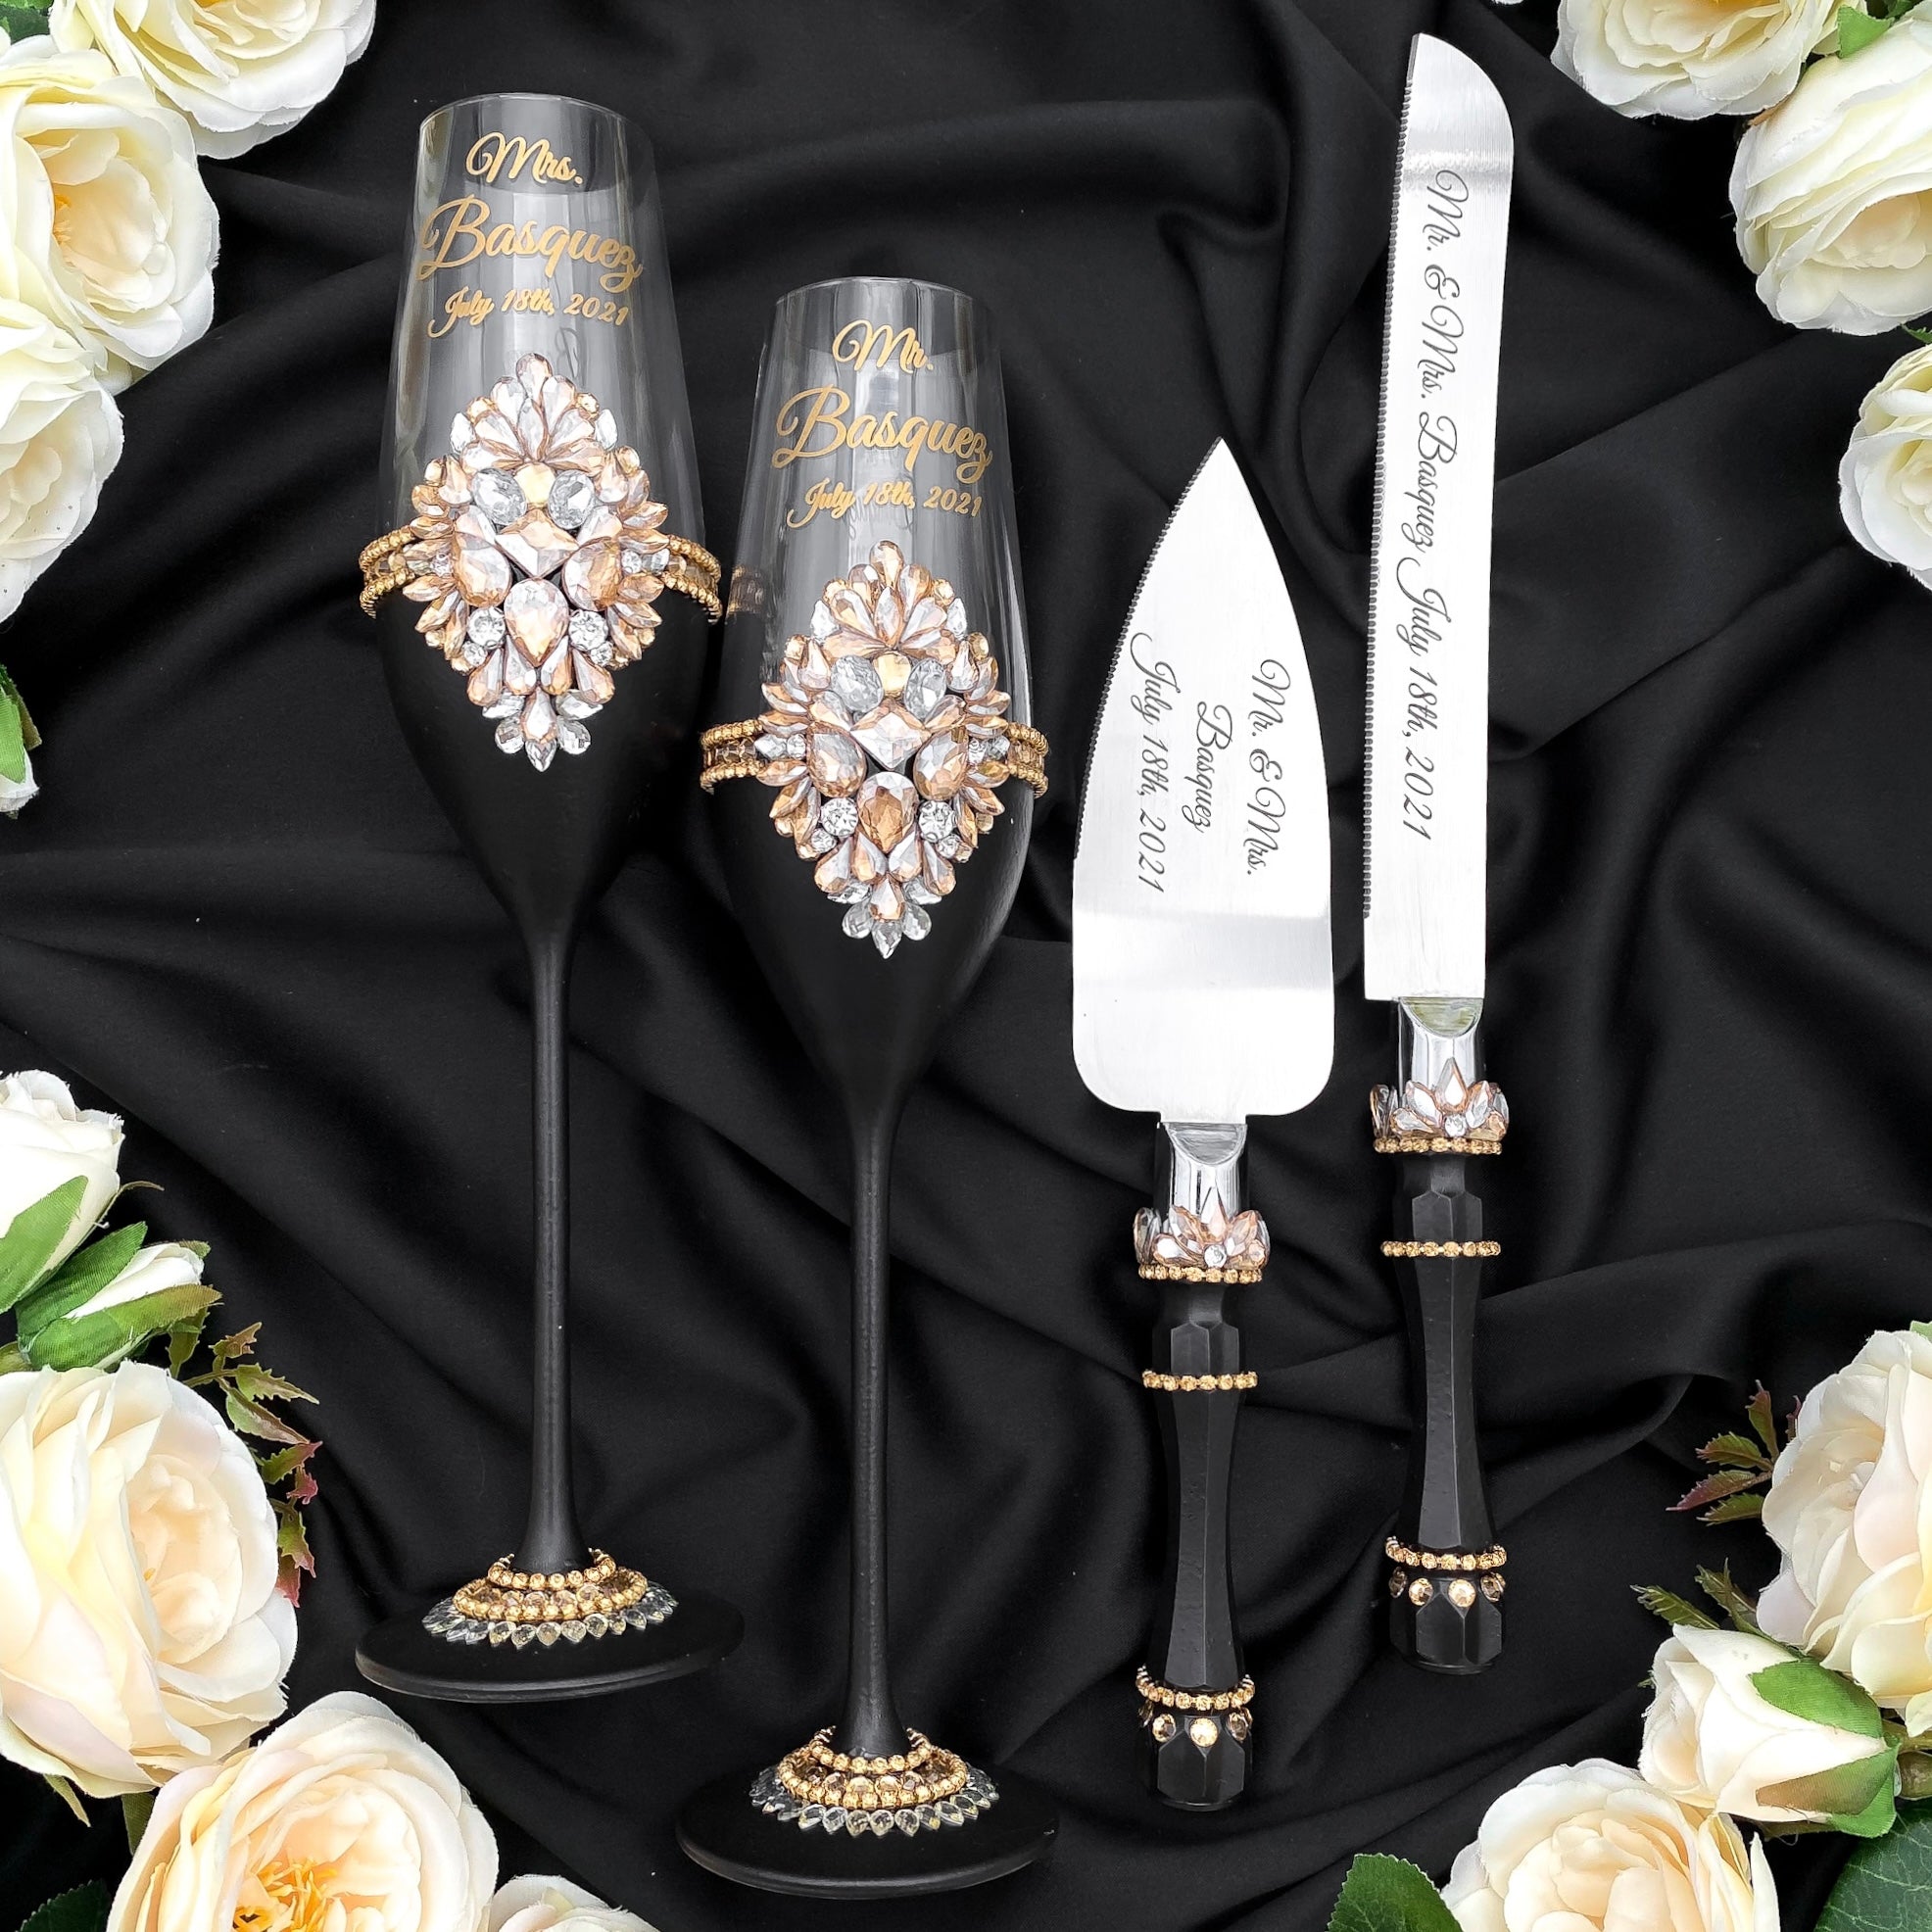 Black wedding cake cutting set, wedding glasses for bride and groom – Gunerska Wedding Accessories